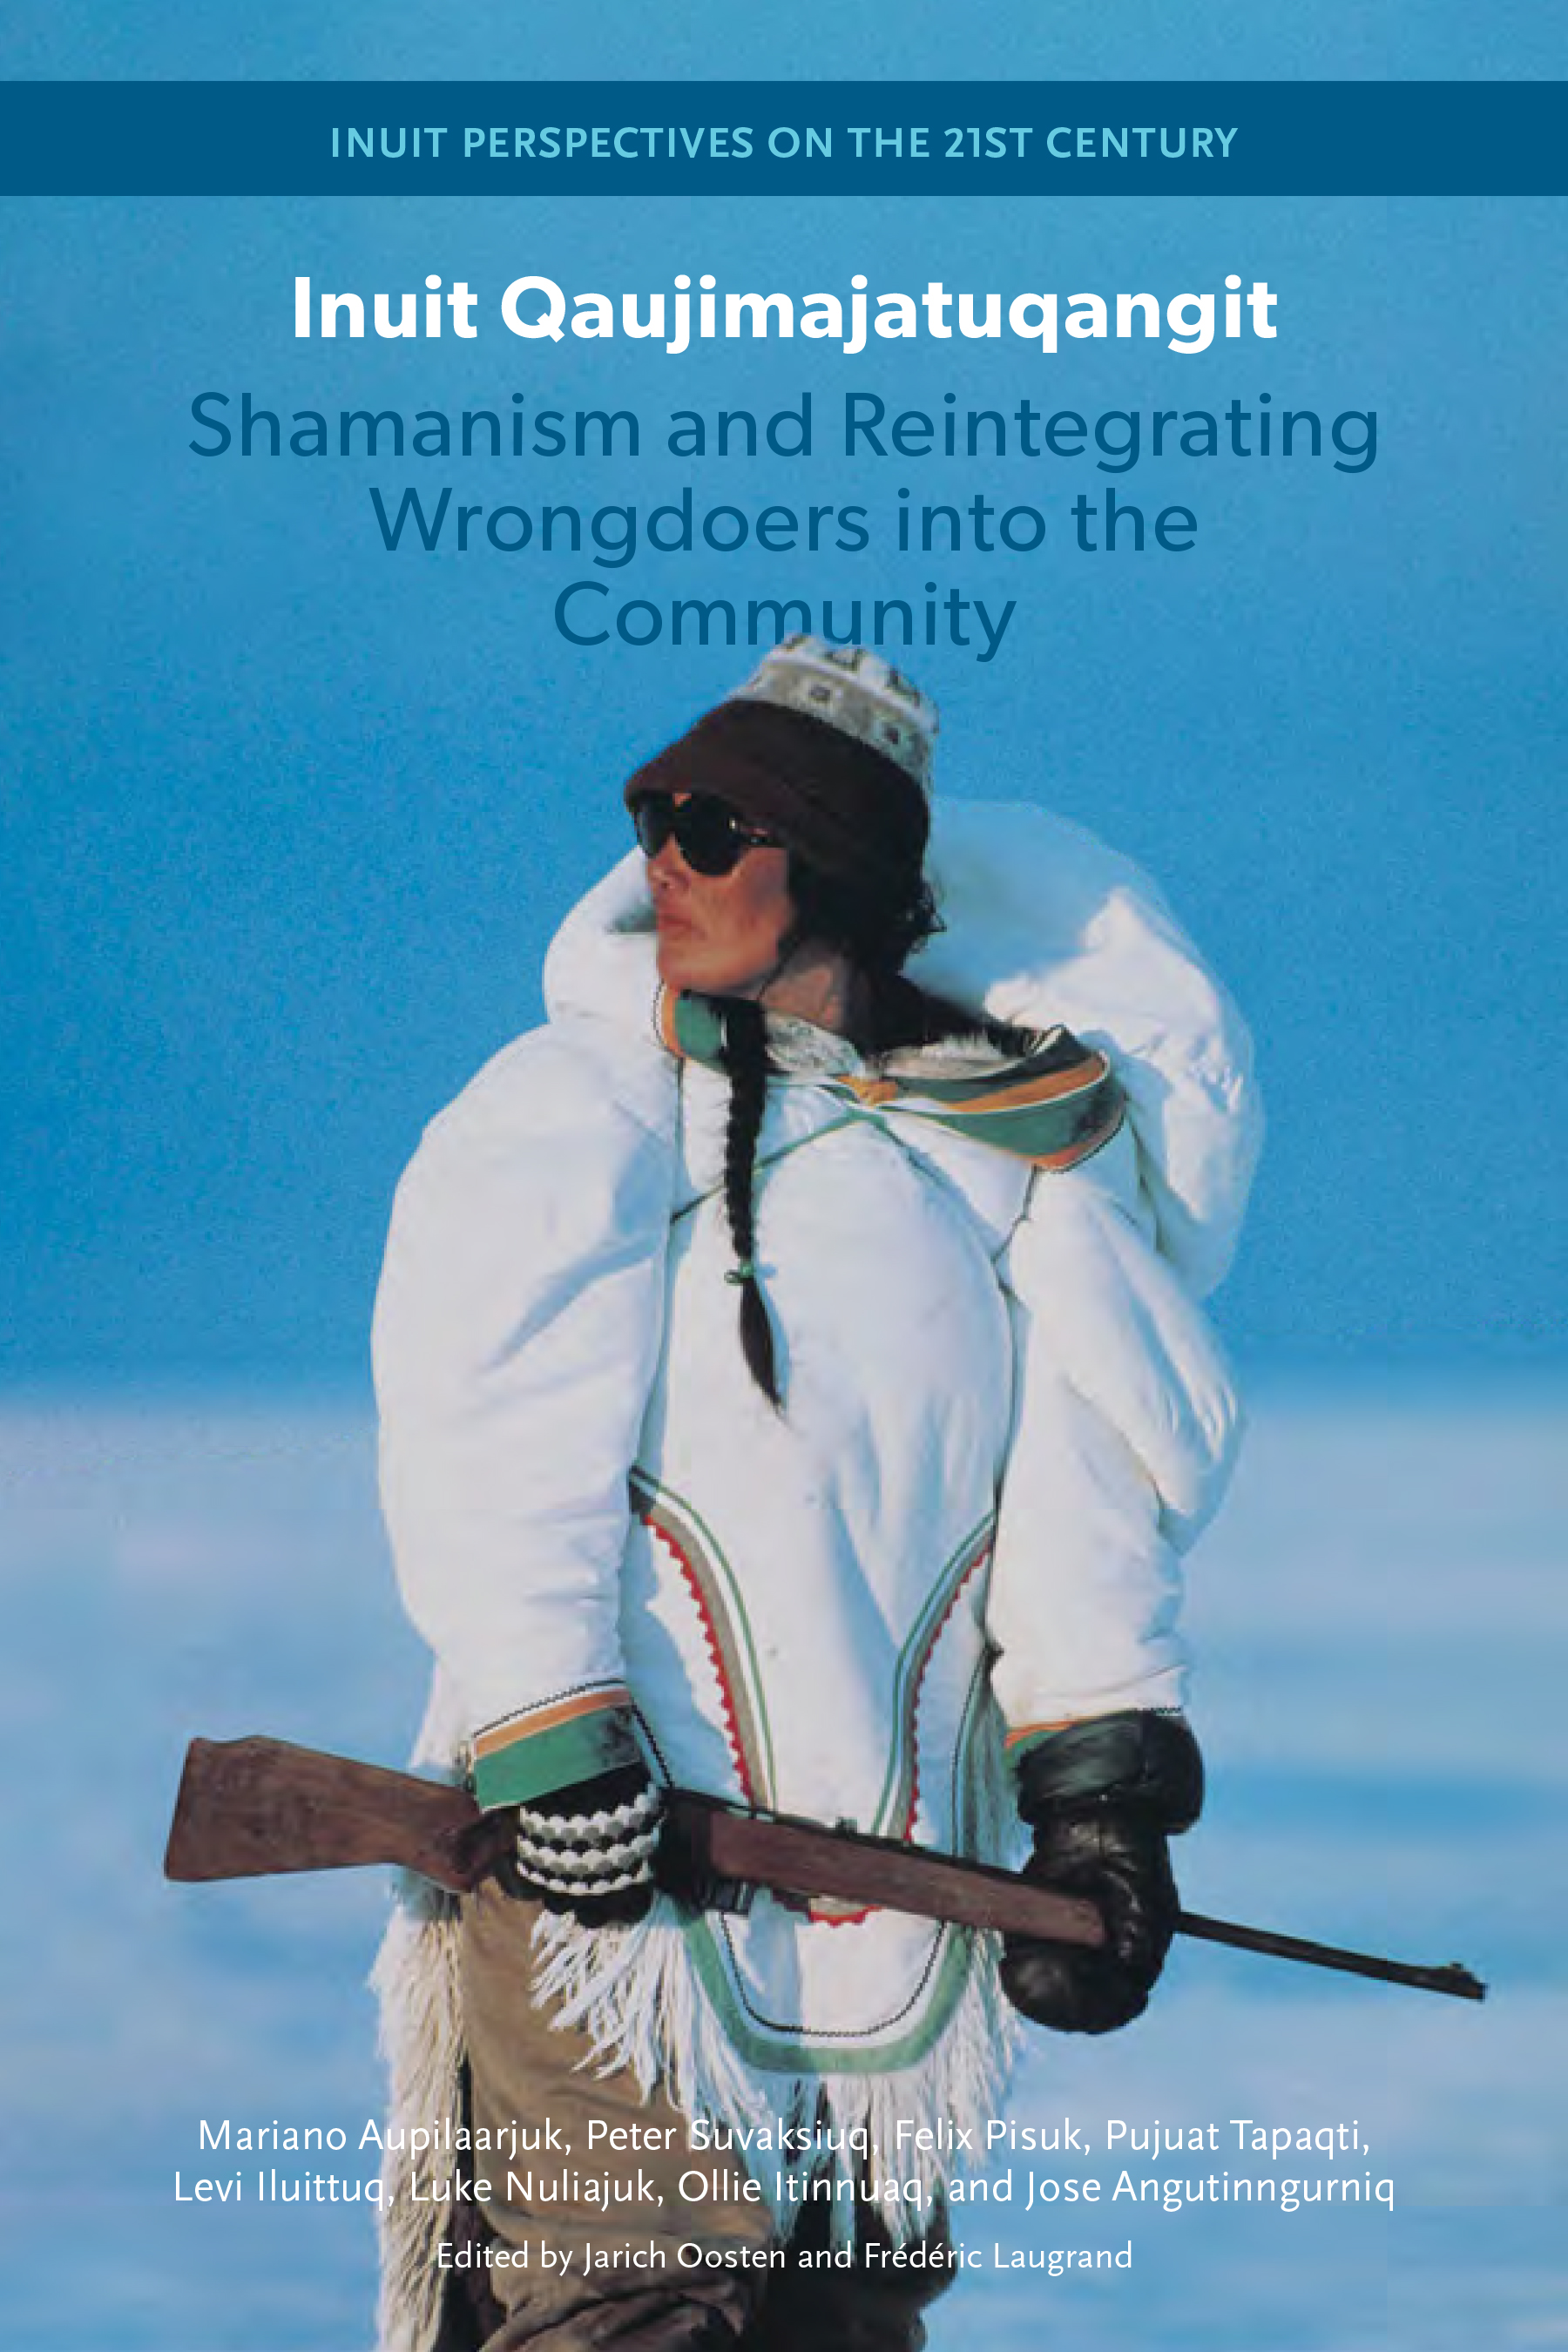 Inuit Qajujimajatuqangit and reintegrating wrongdoers into the Community